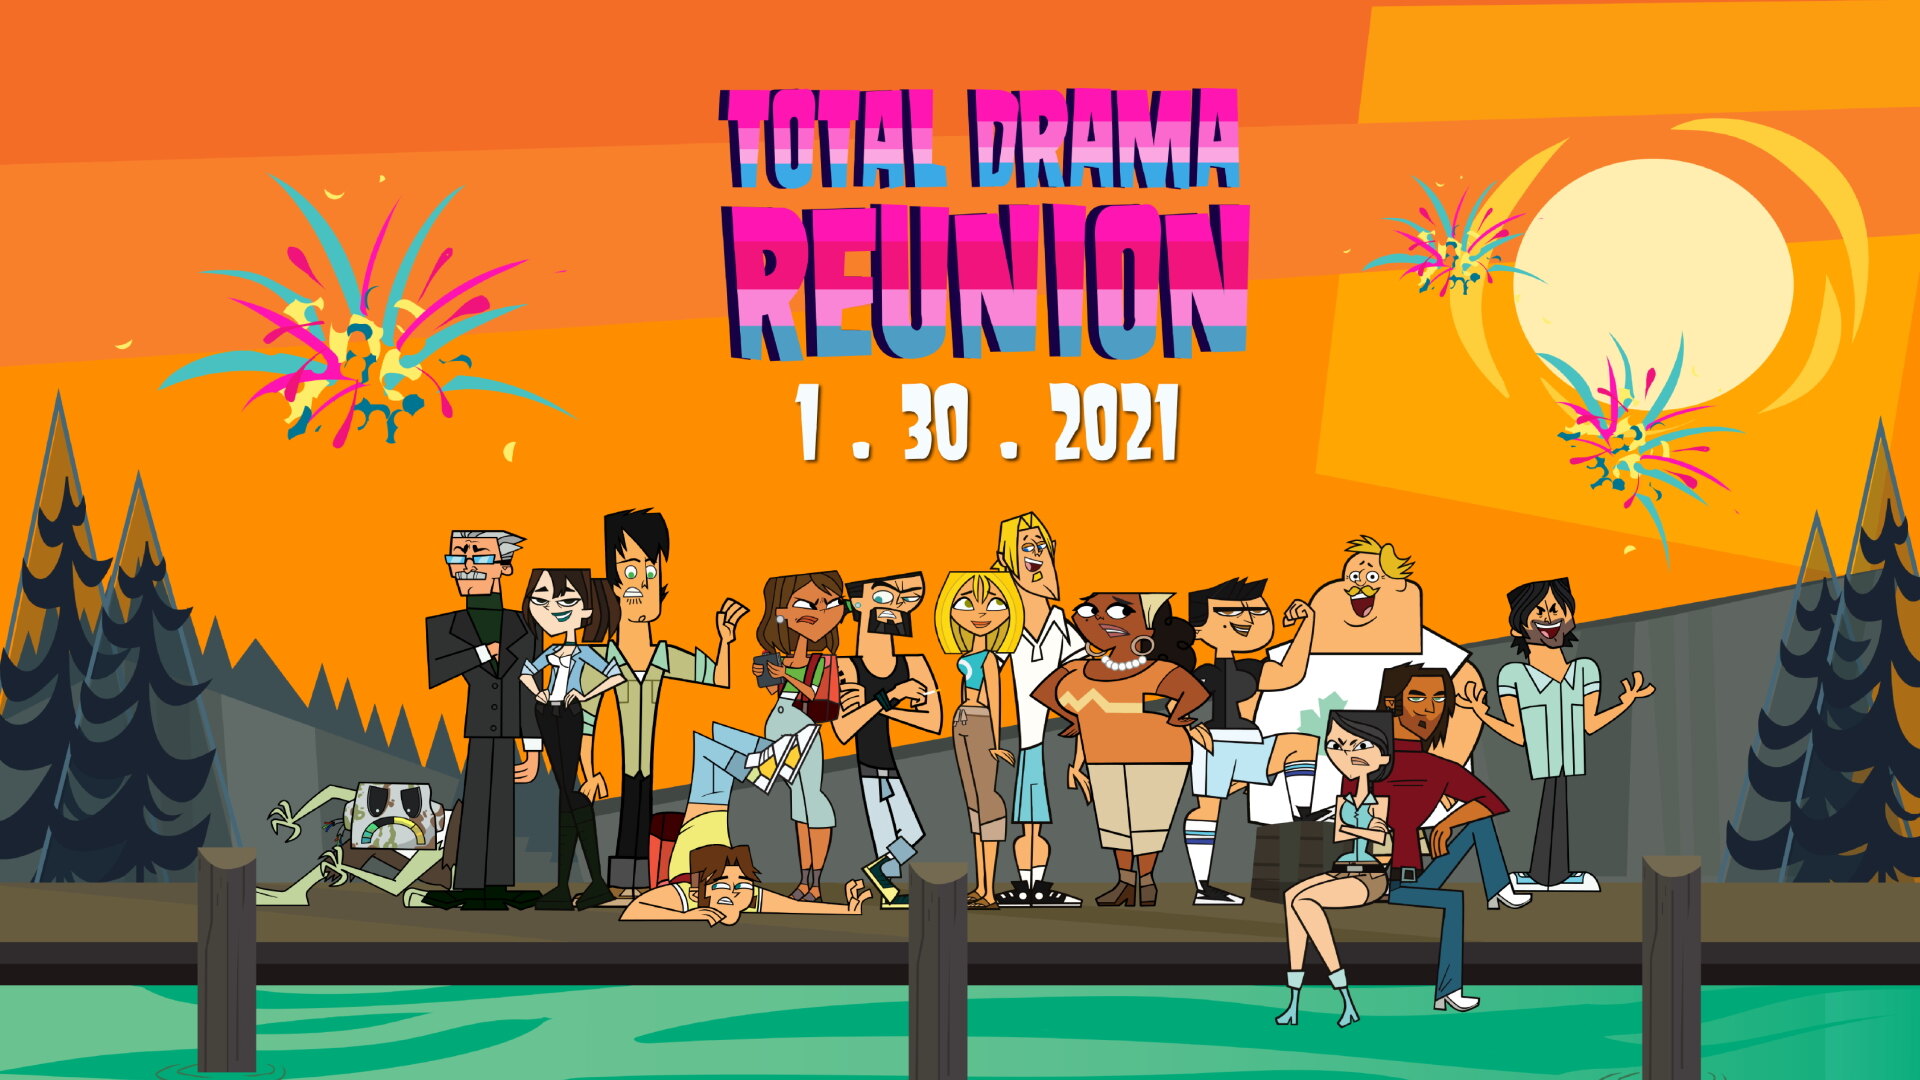 Total Drama Reunion (TV Series 2021)